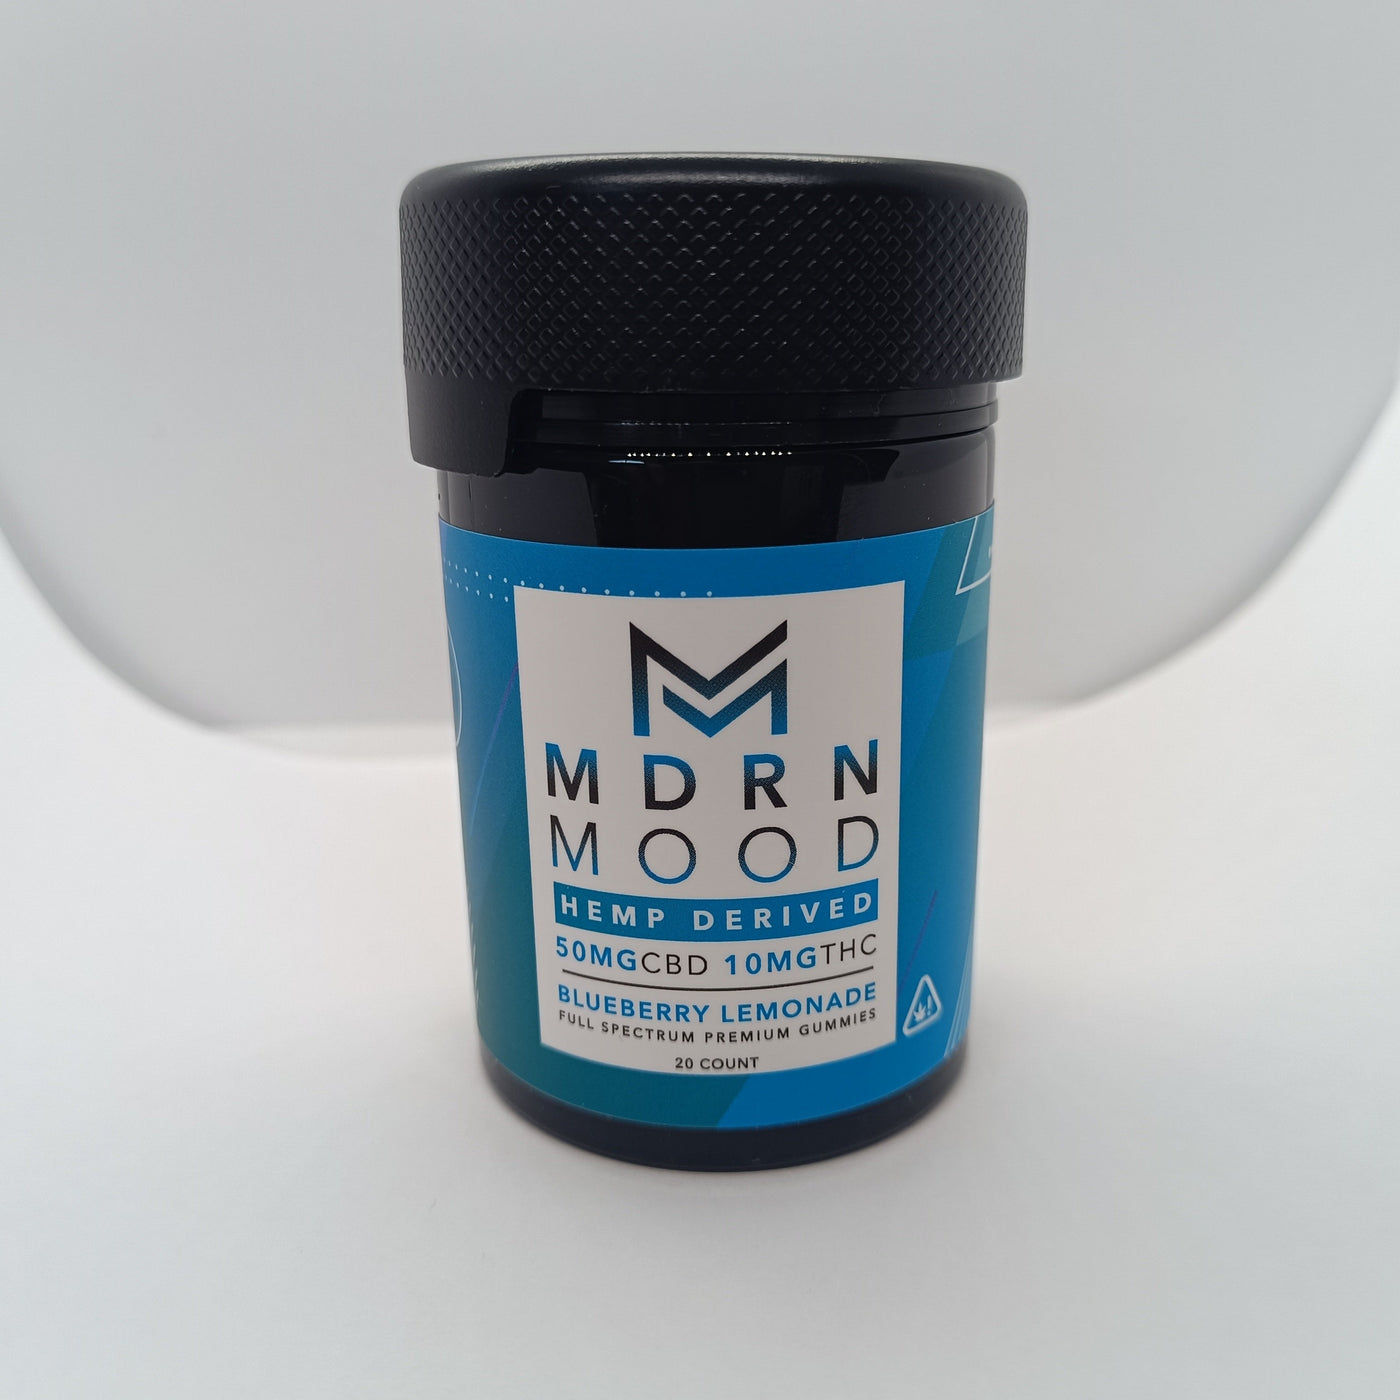 MDRN MOOD - 20GUMMIES - 50mg CBD/10mg THC - BLUEBERRY LIMONADE